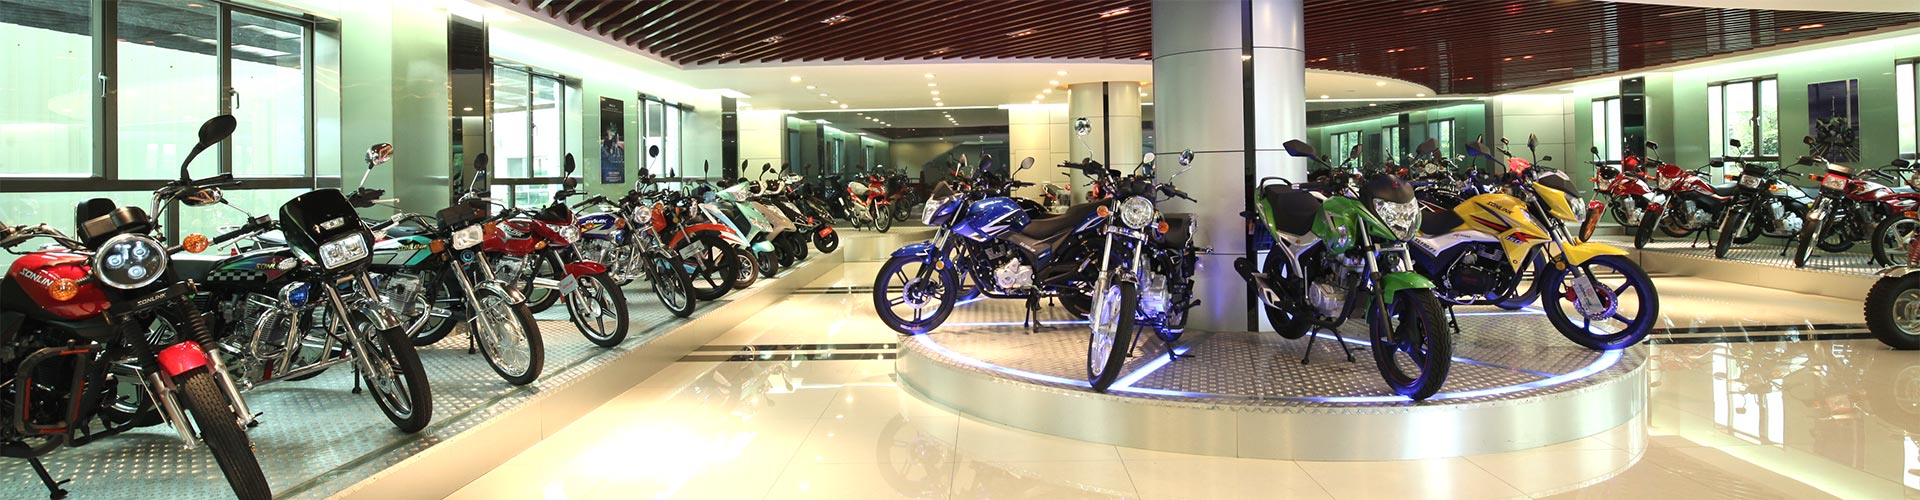 Sonlink moto 125cc/150cc con Headcover con motor Cg OEM ODM Moto para  adultos - China Moto de fábrica, 150cc moto